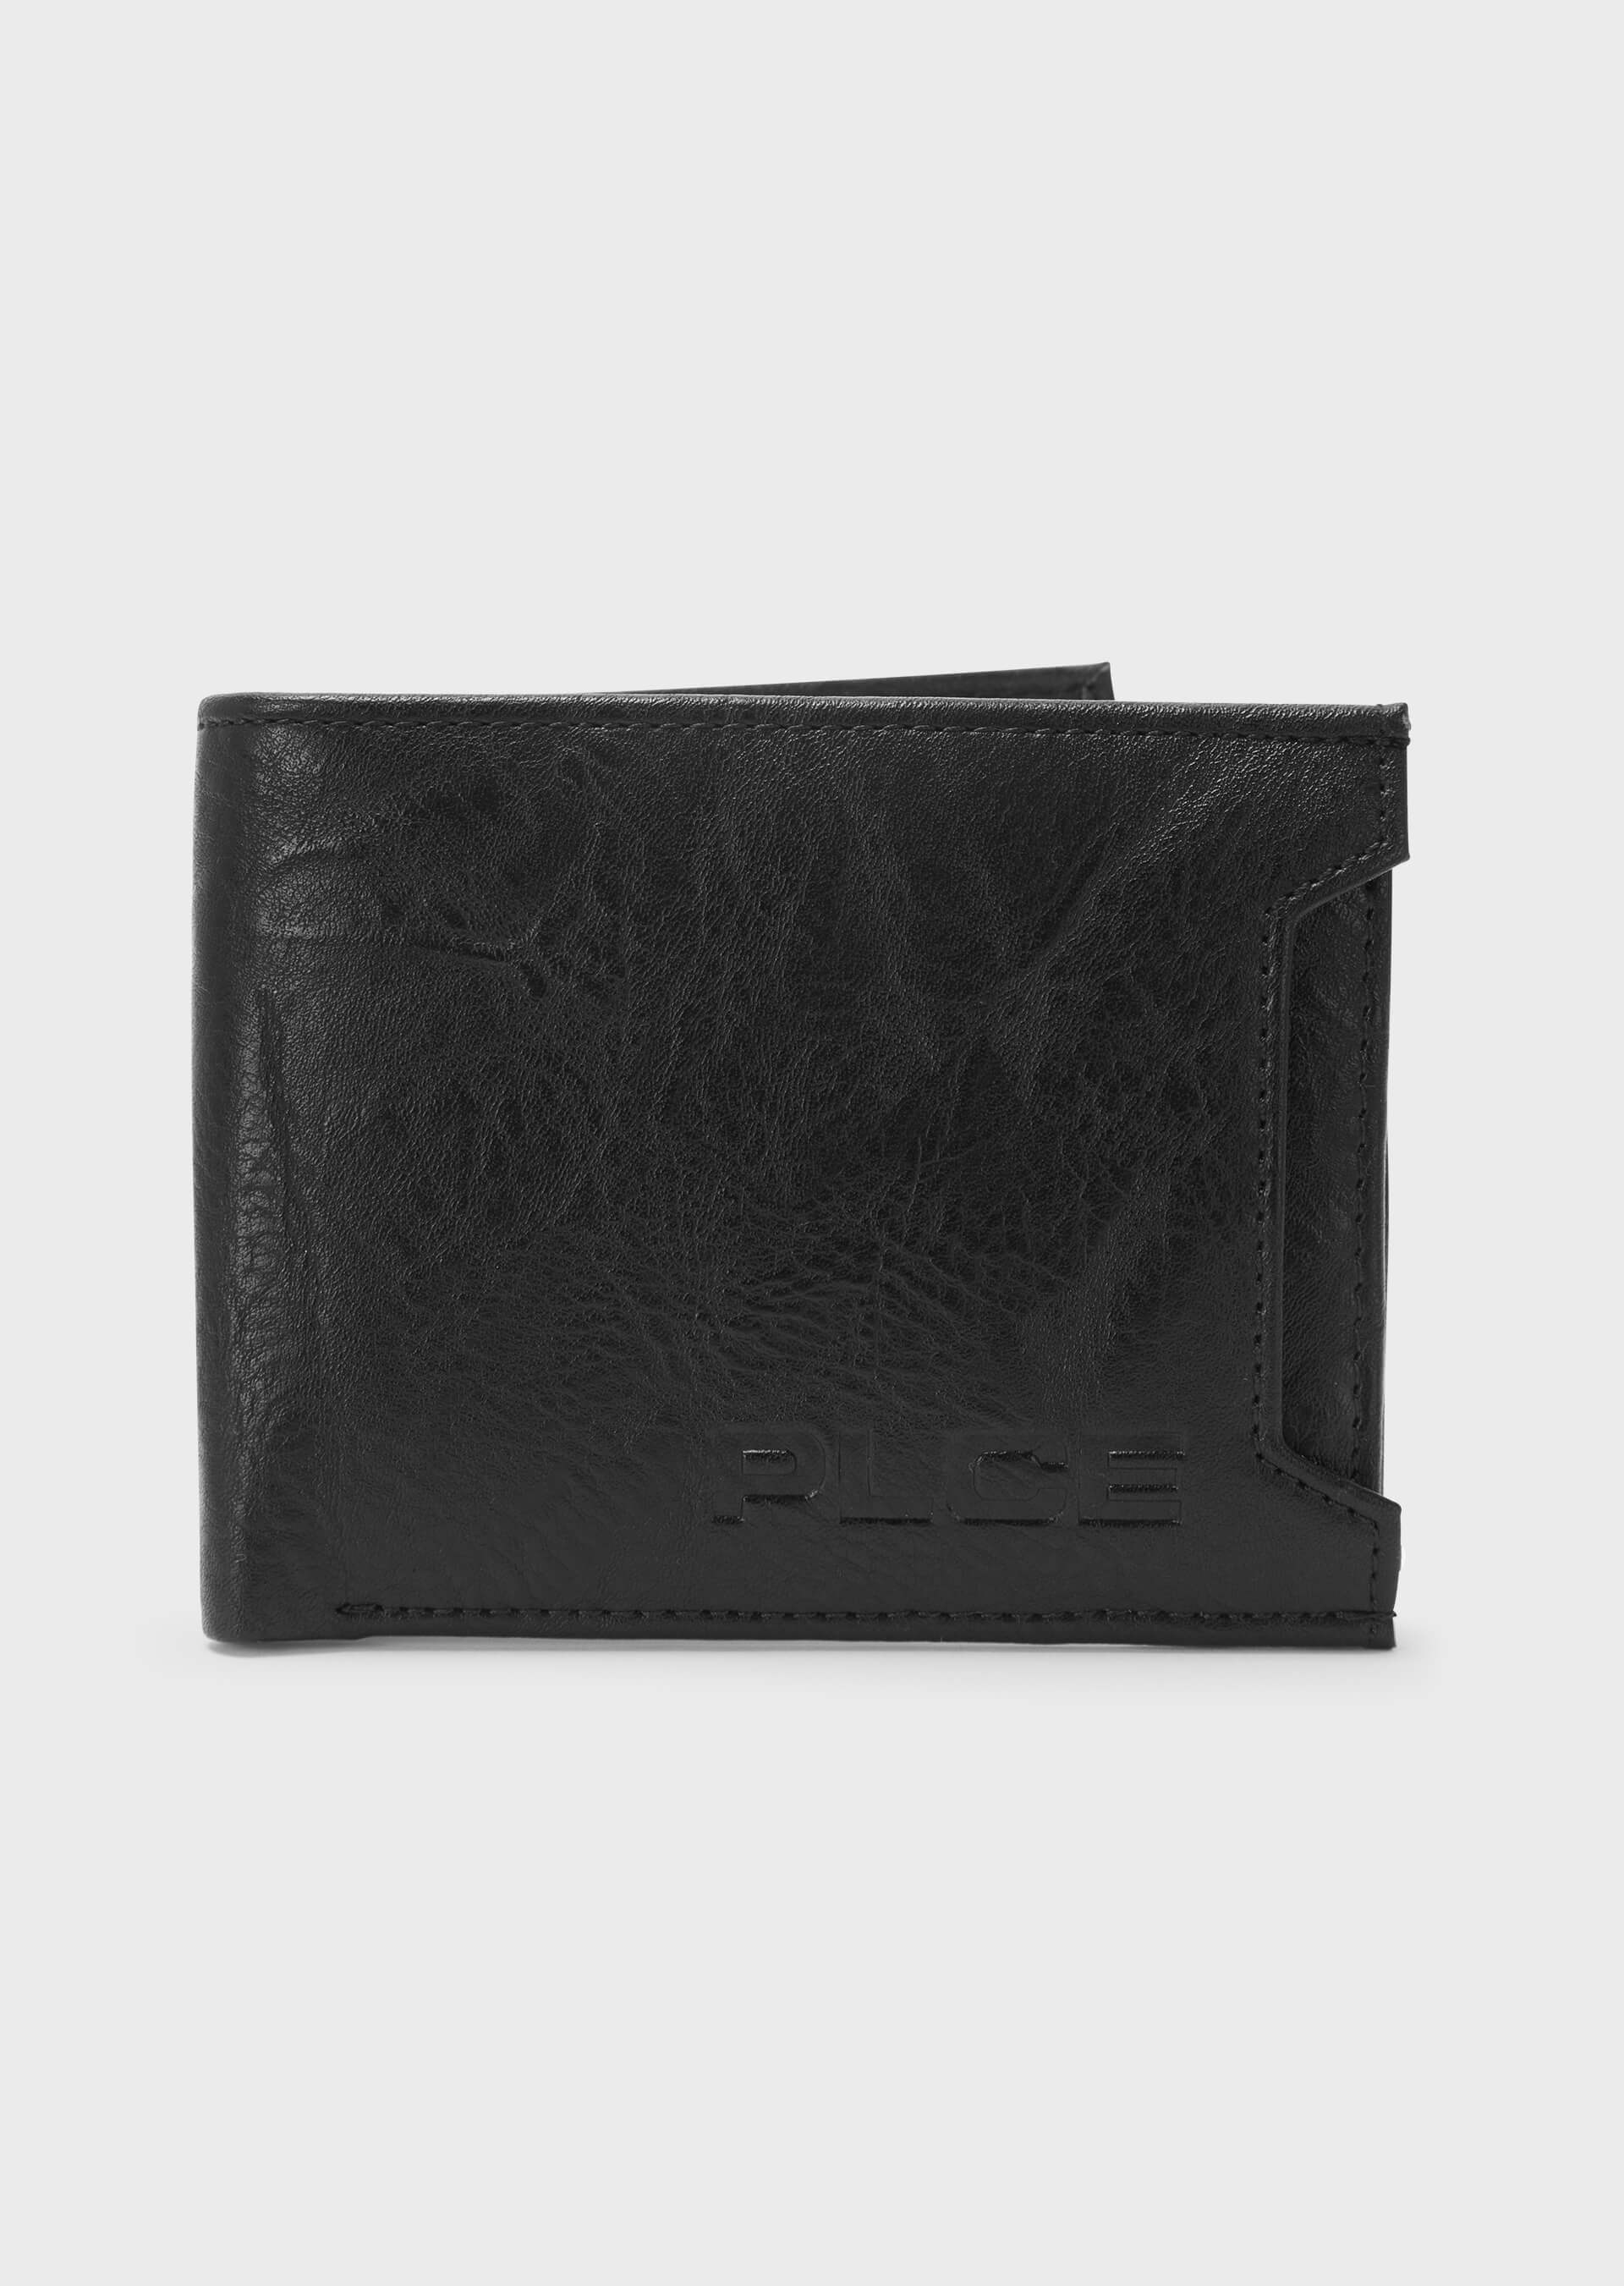 Police wallets - Police Moto Slim Wallet Black